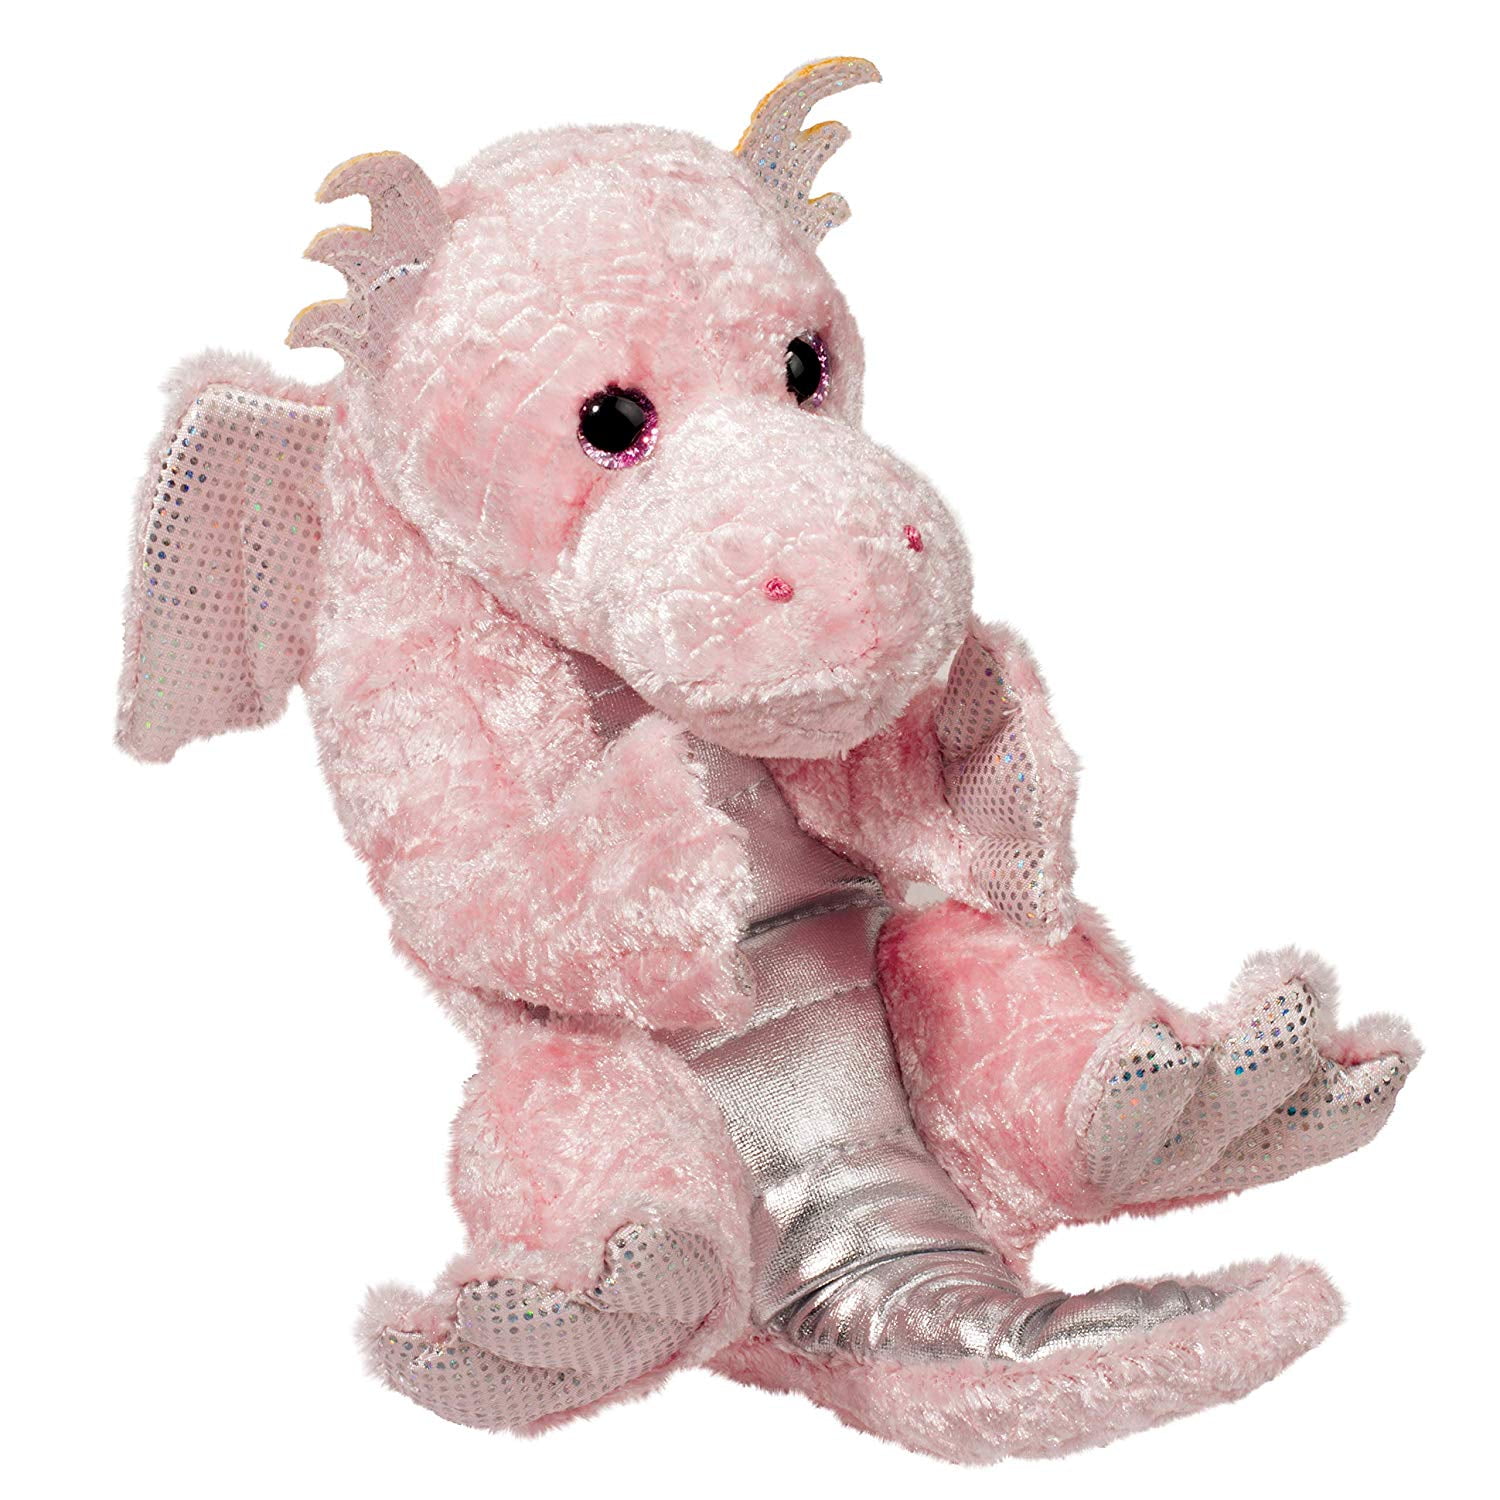 dragon stuffed animal